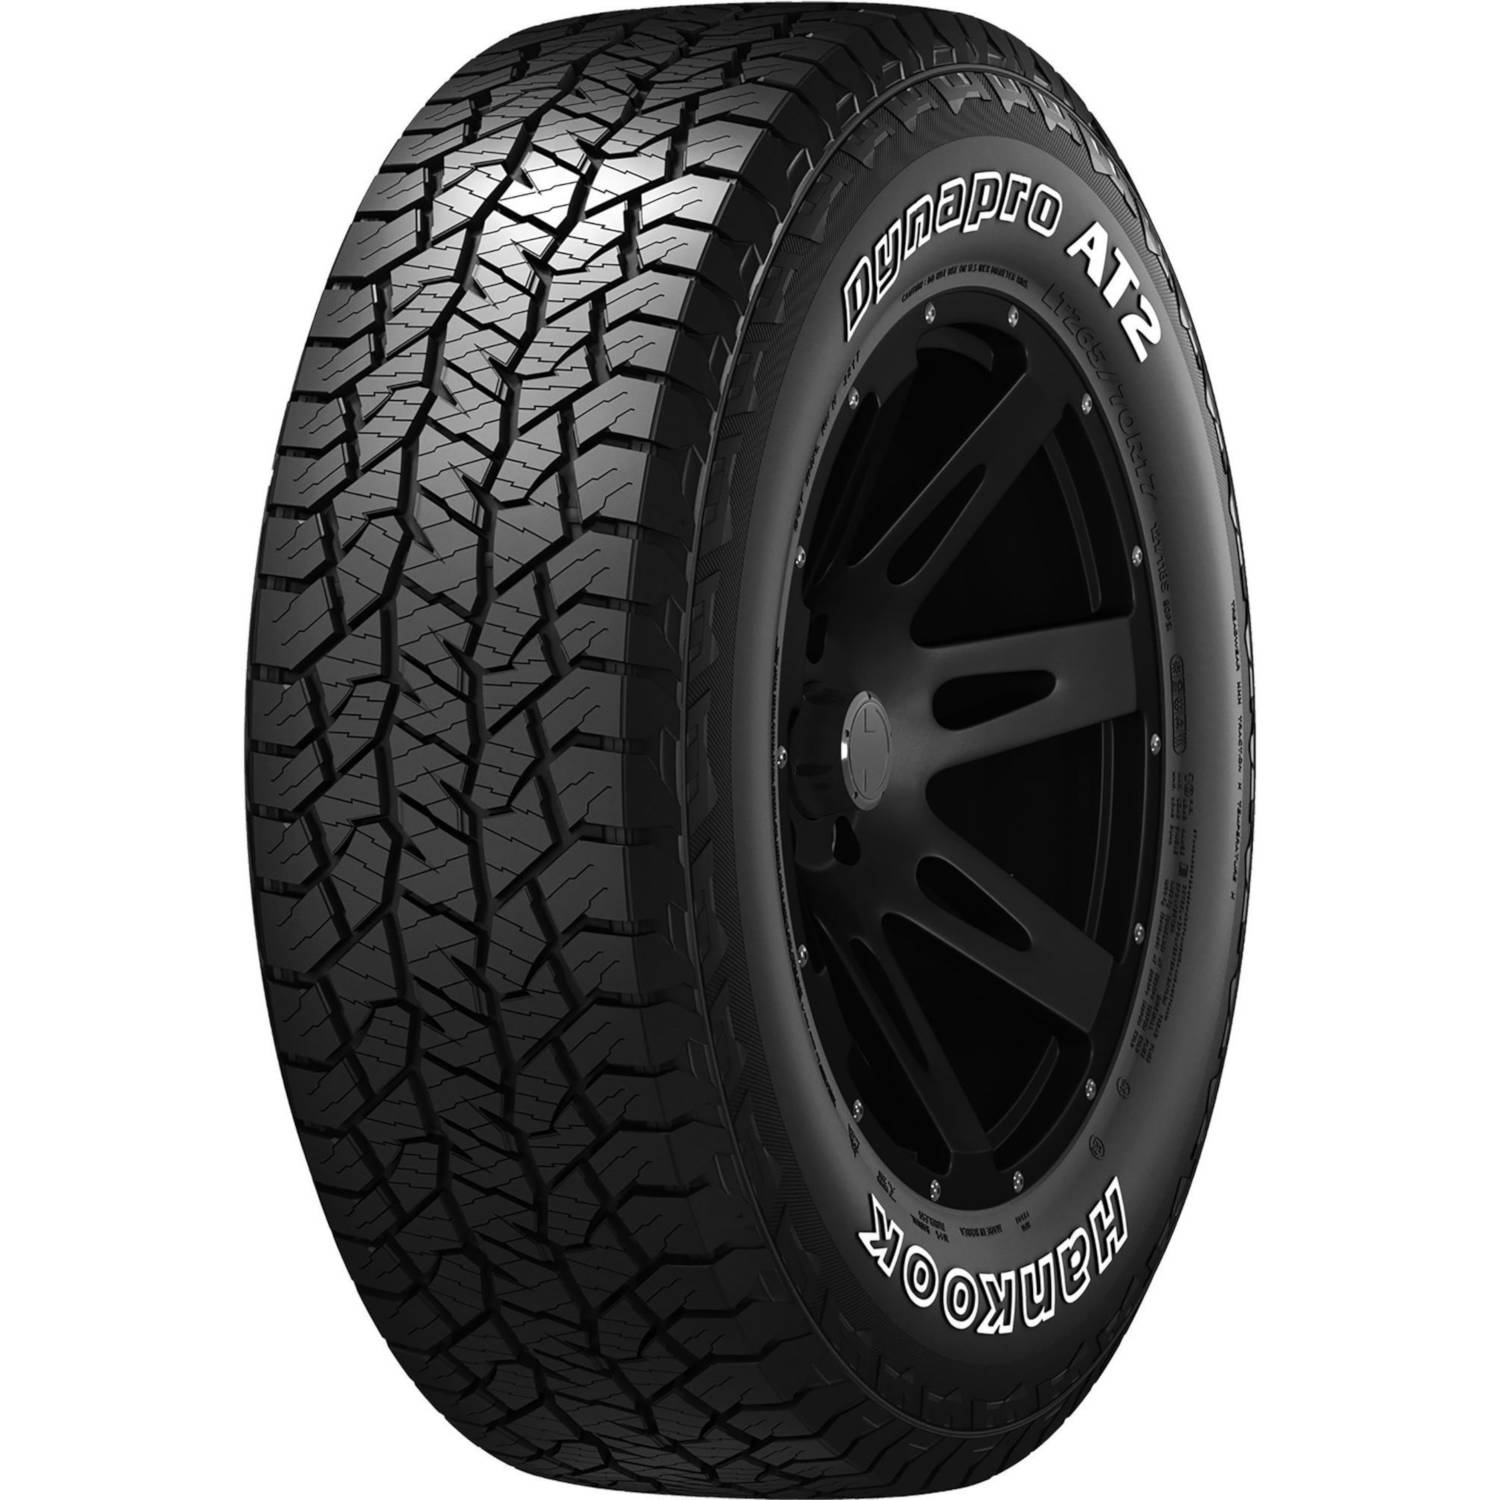 HANKOOK DYNAPRO AT2 215/65R17 (28X8.5R 17) Tires